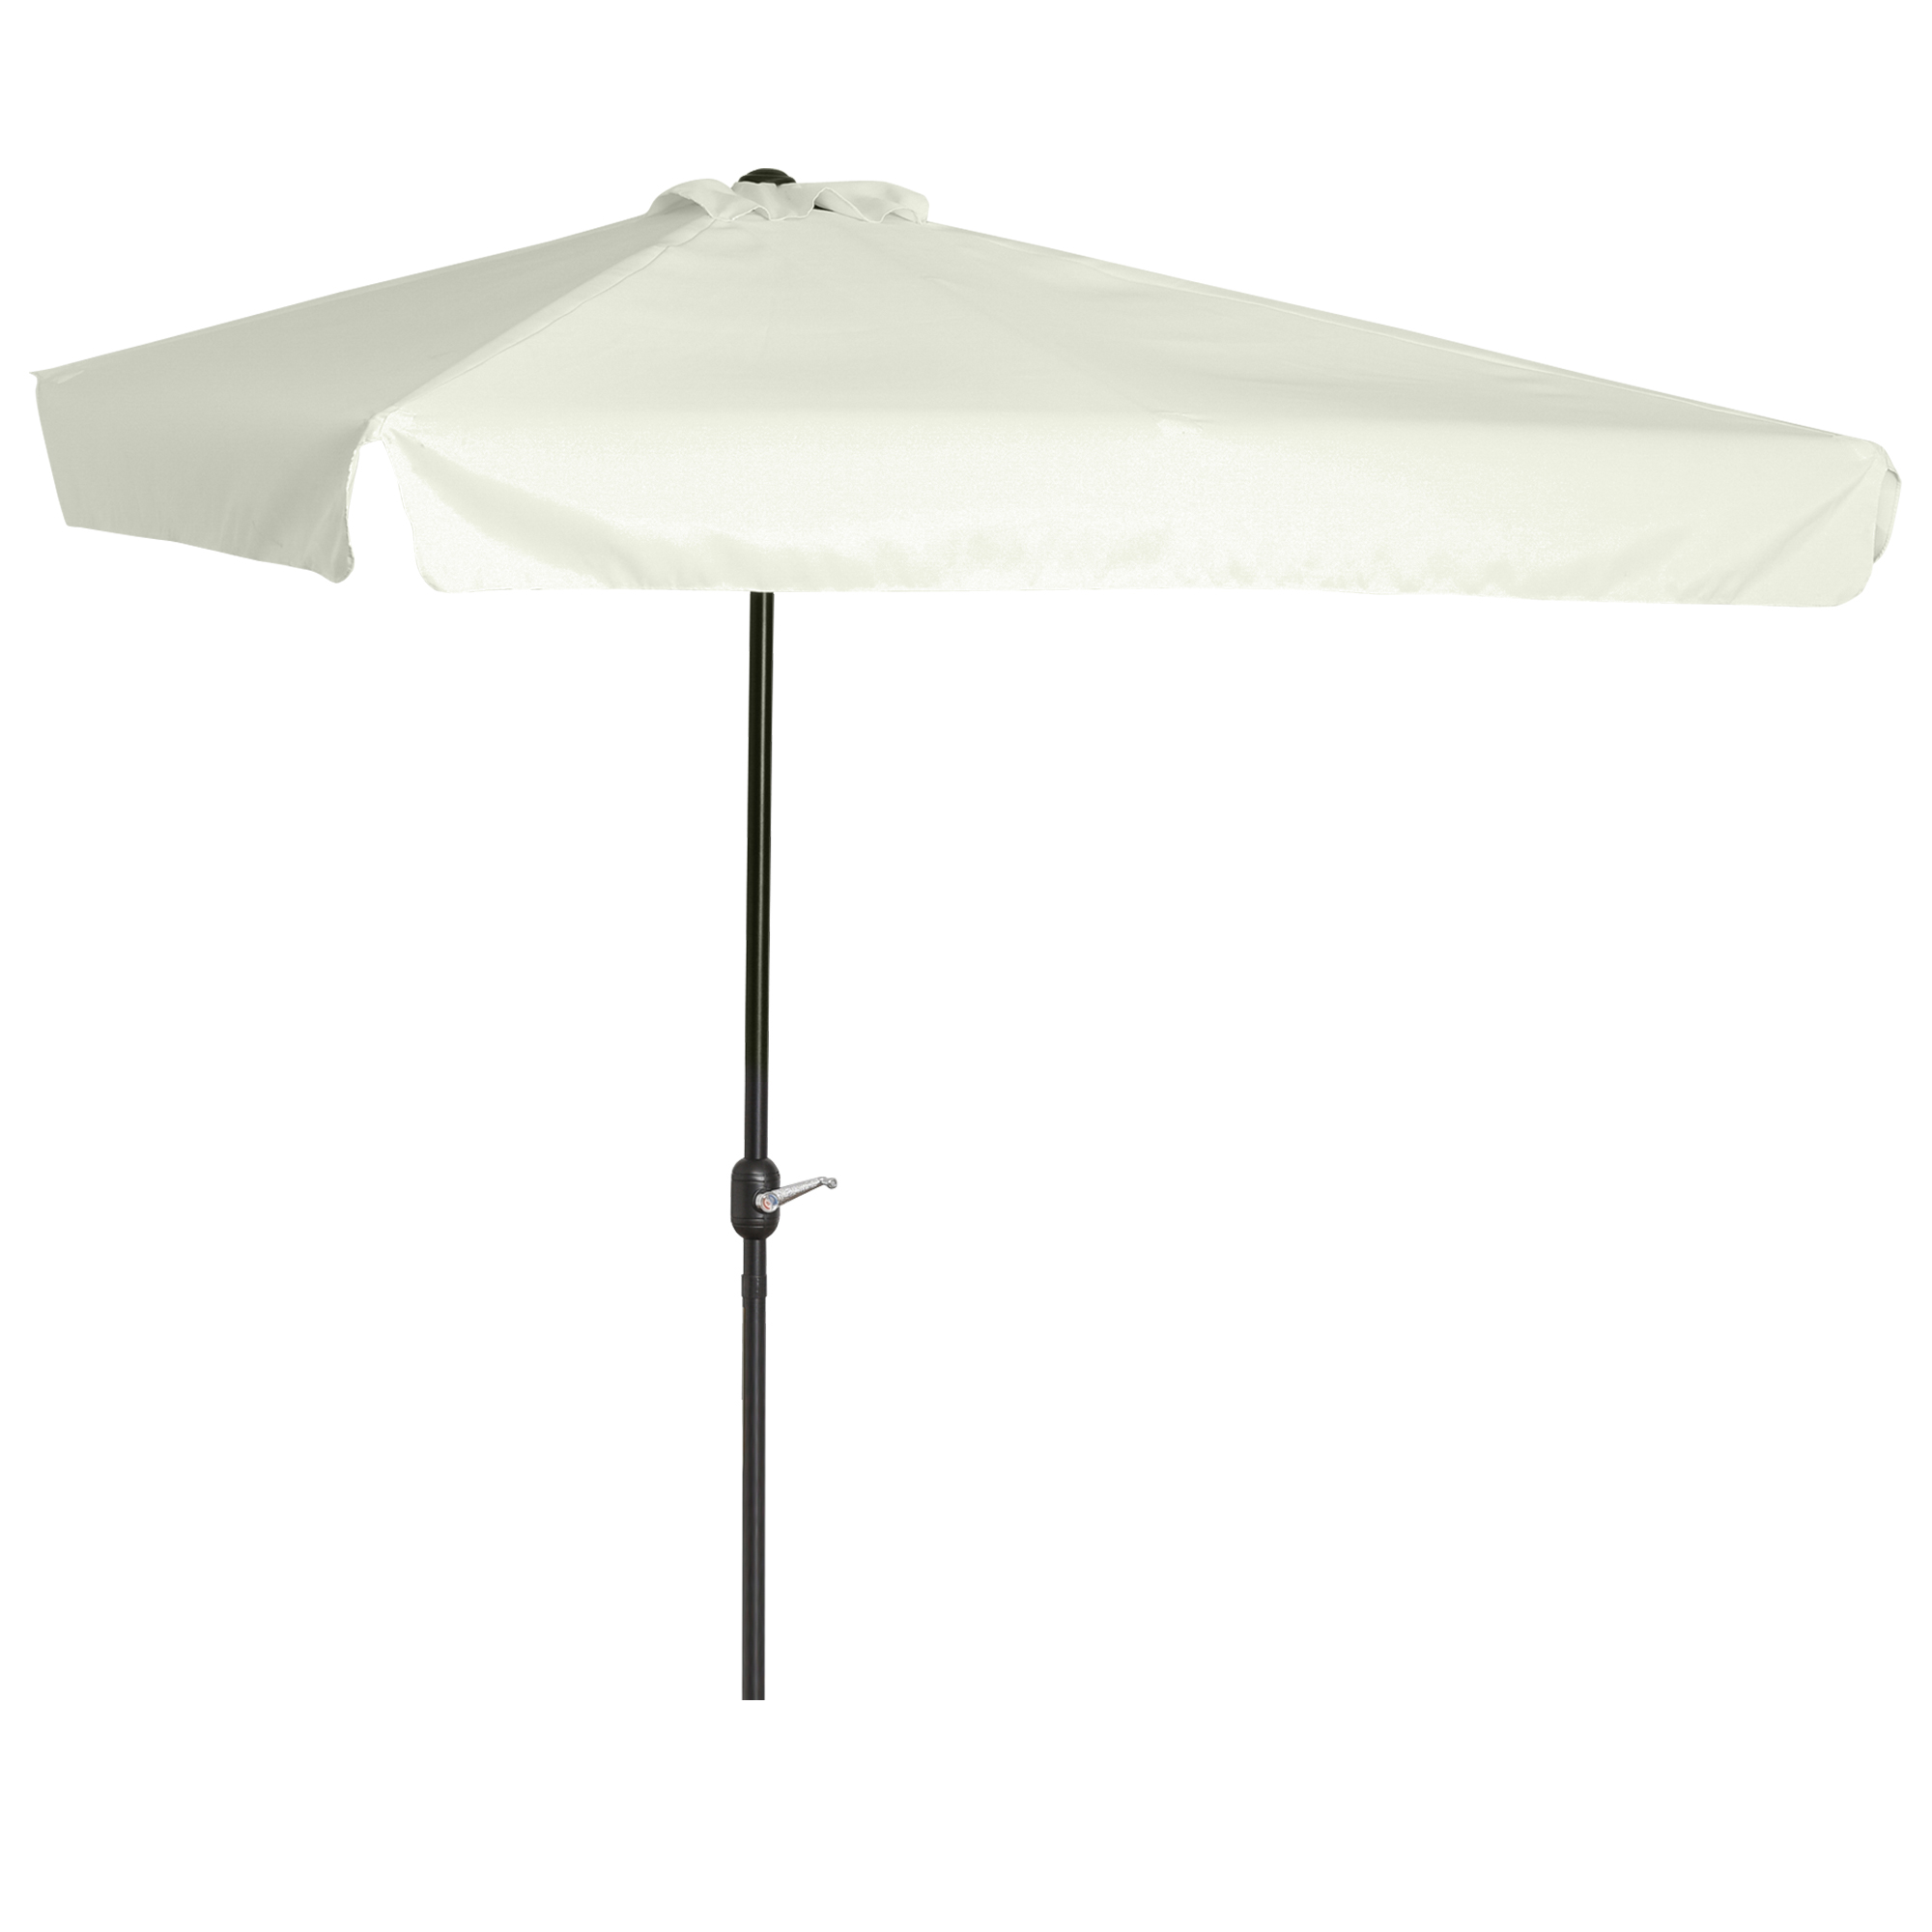 Outsunny ημικυκλική ομπρέλα για βεράντα και κήπο με μανιβέλα